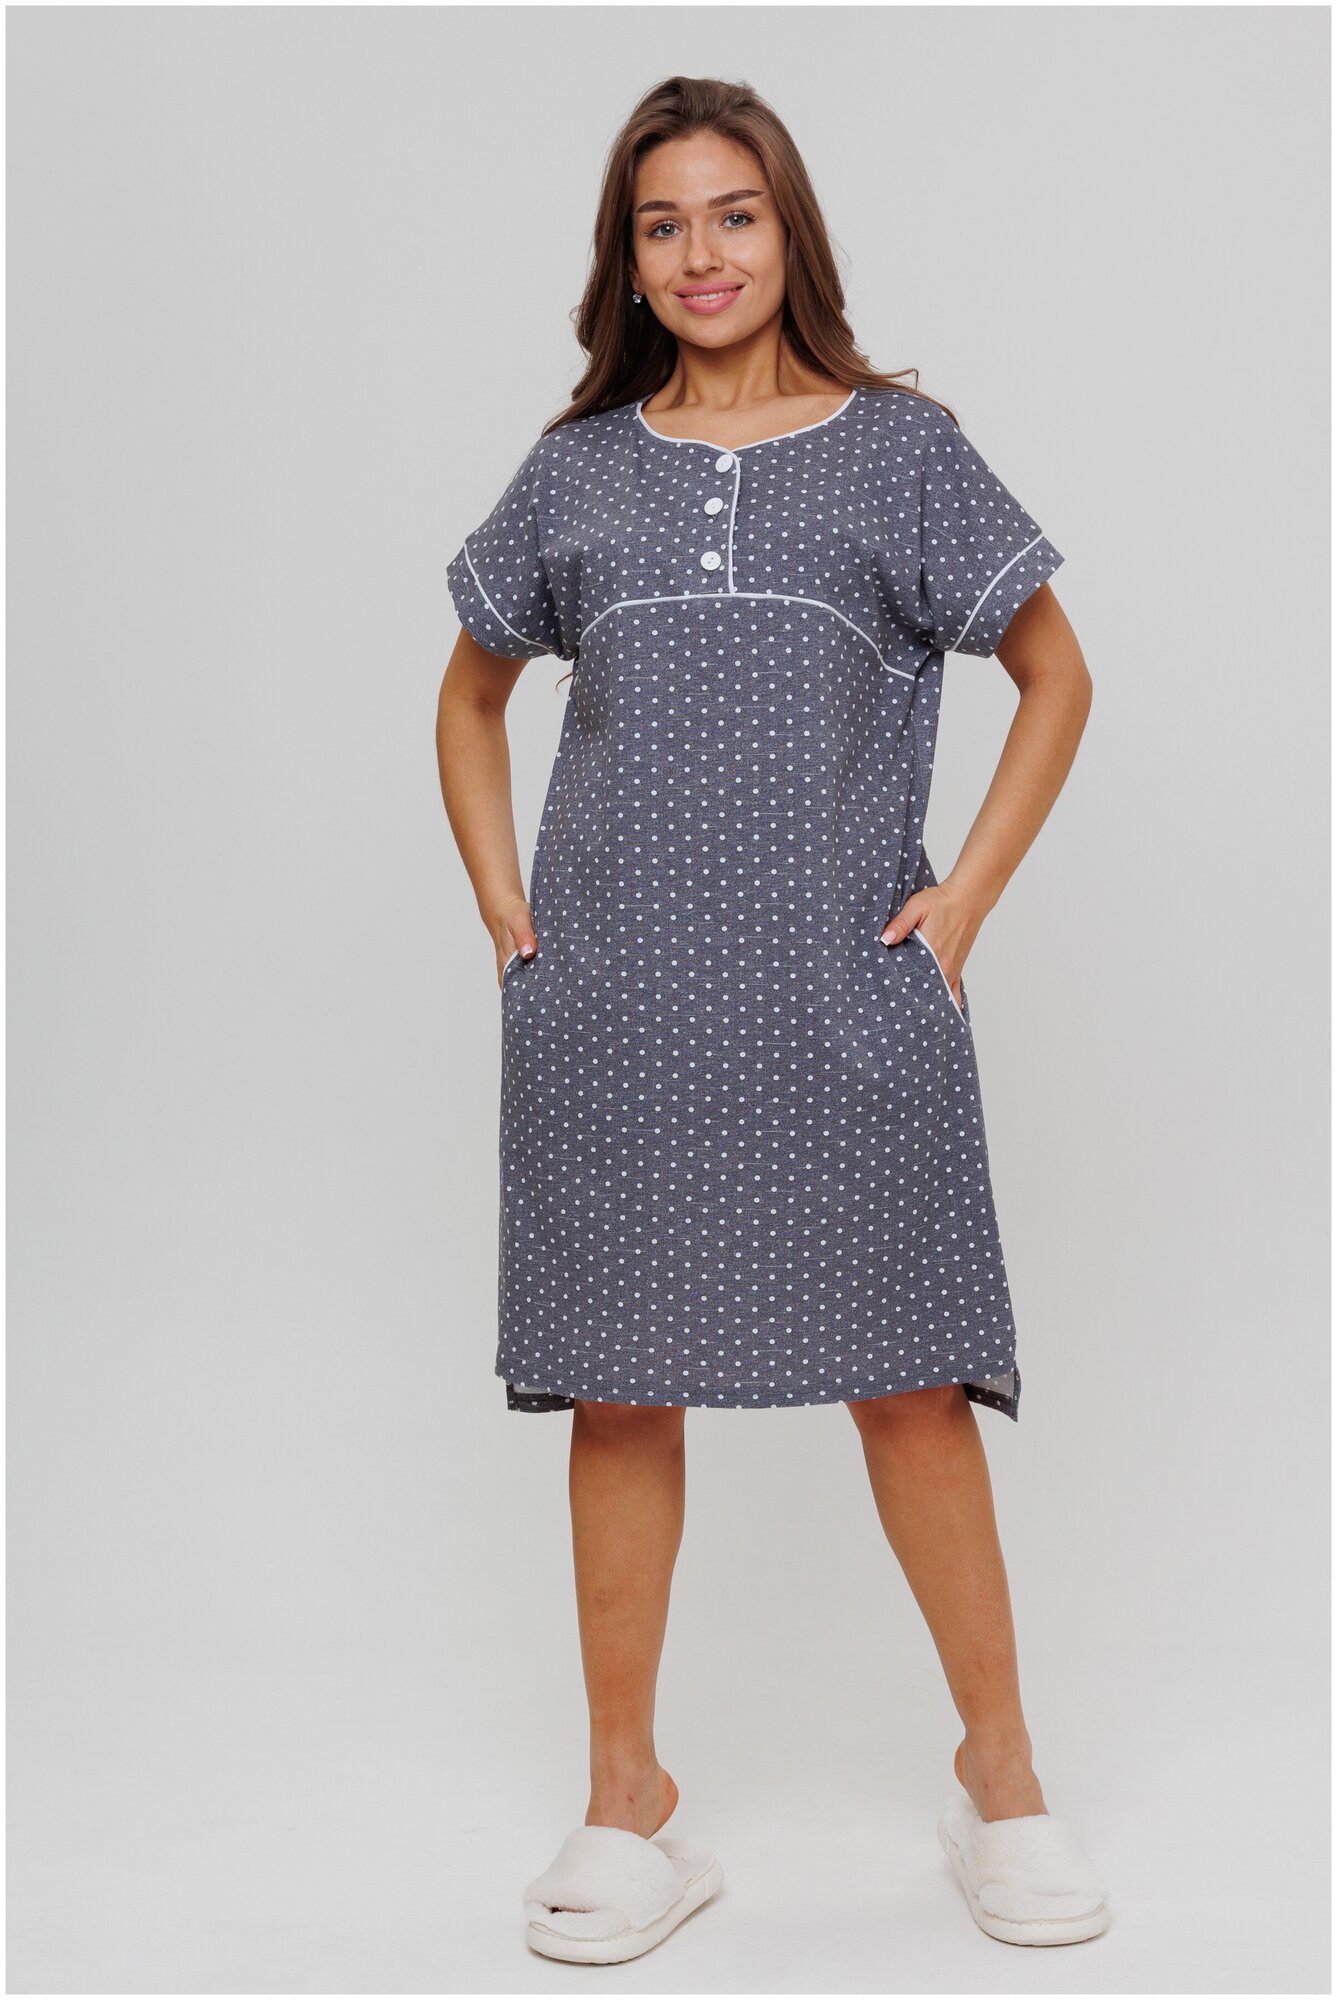 Платье-туника домашнее Modellini 1702/3 серый, 54 размер - фотография № 3